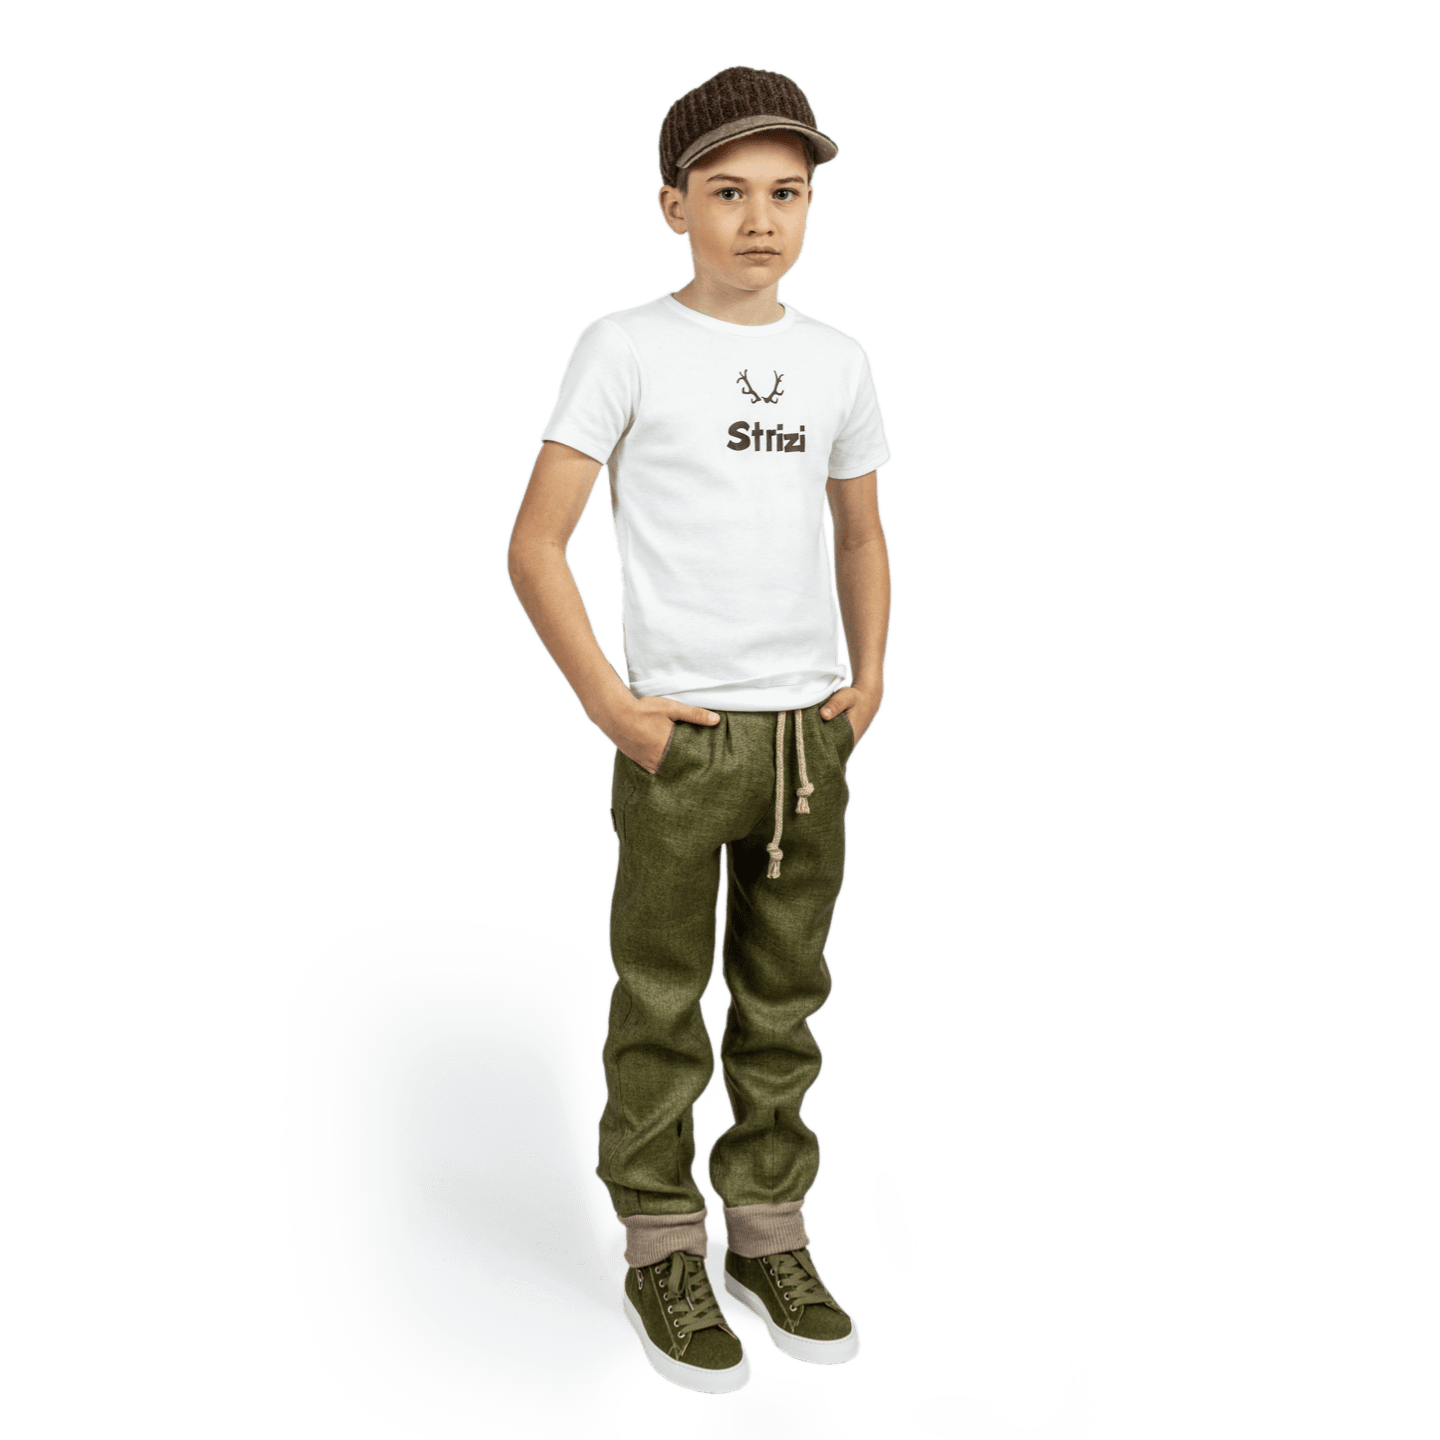 Strizi Kinder Striz Shirt weiss 1 - Strizi Kids Felt cap green